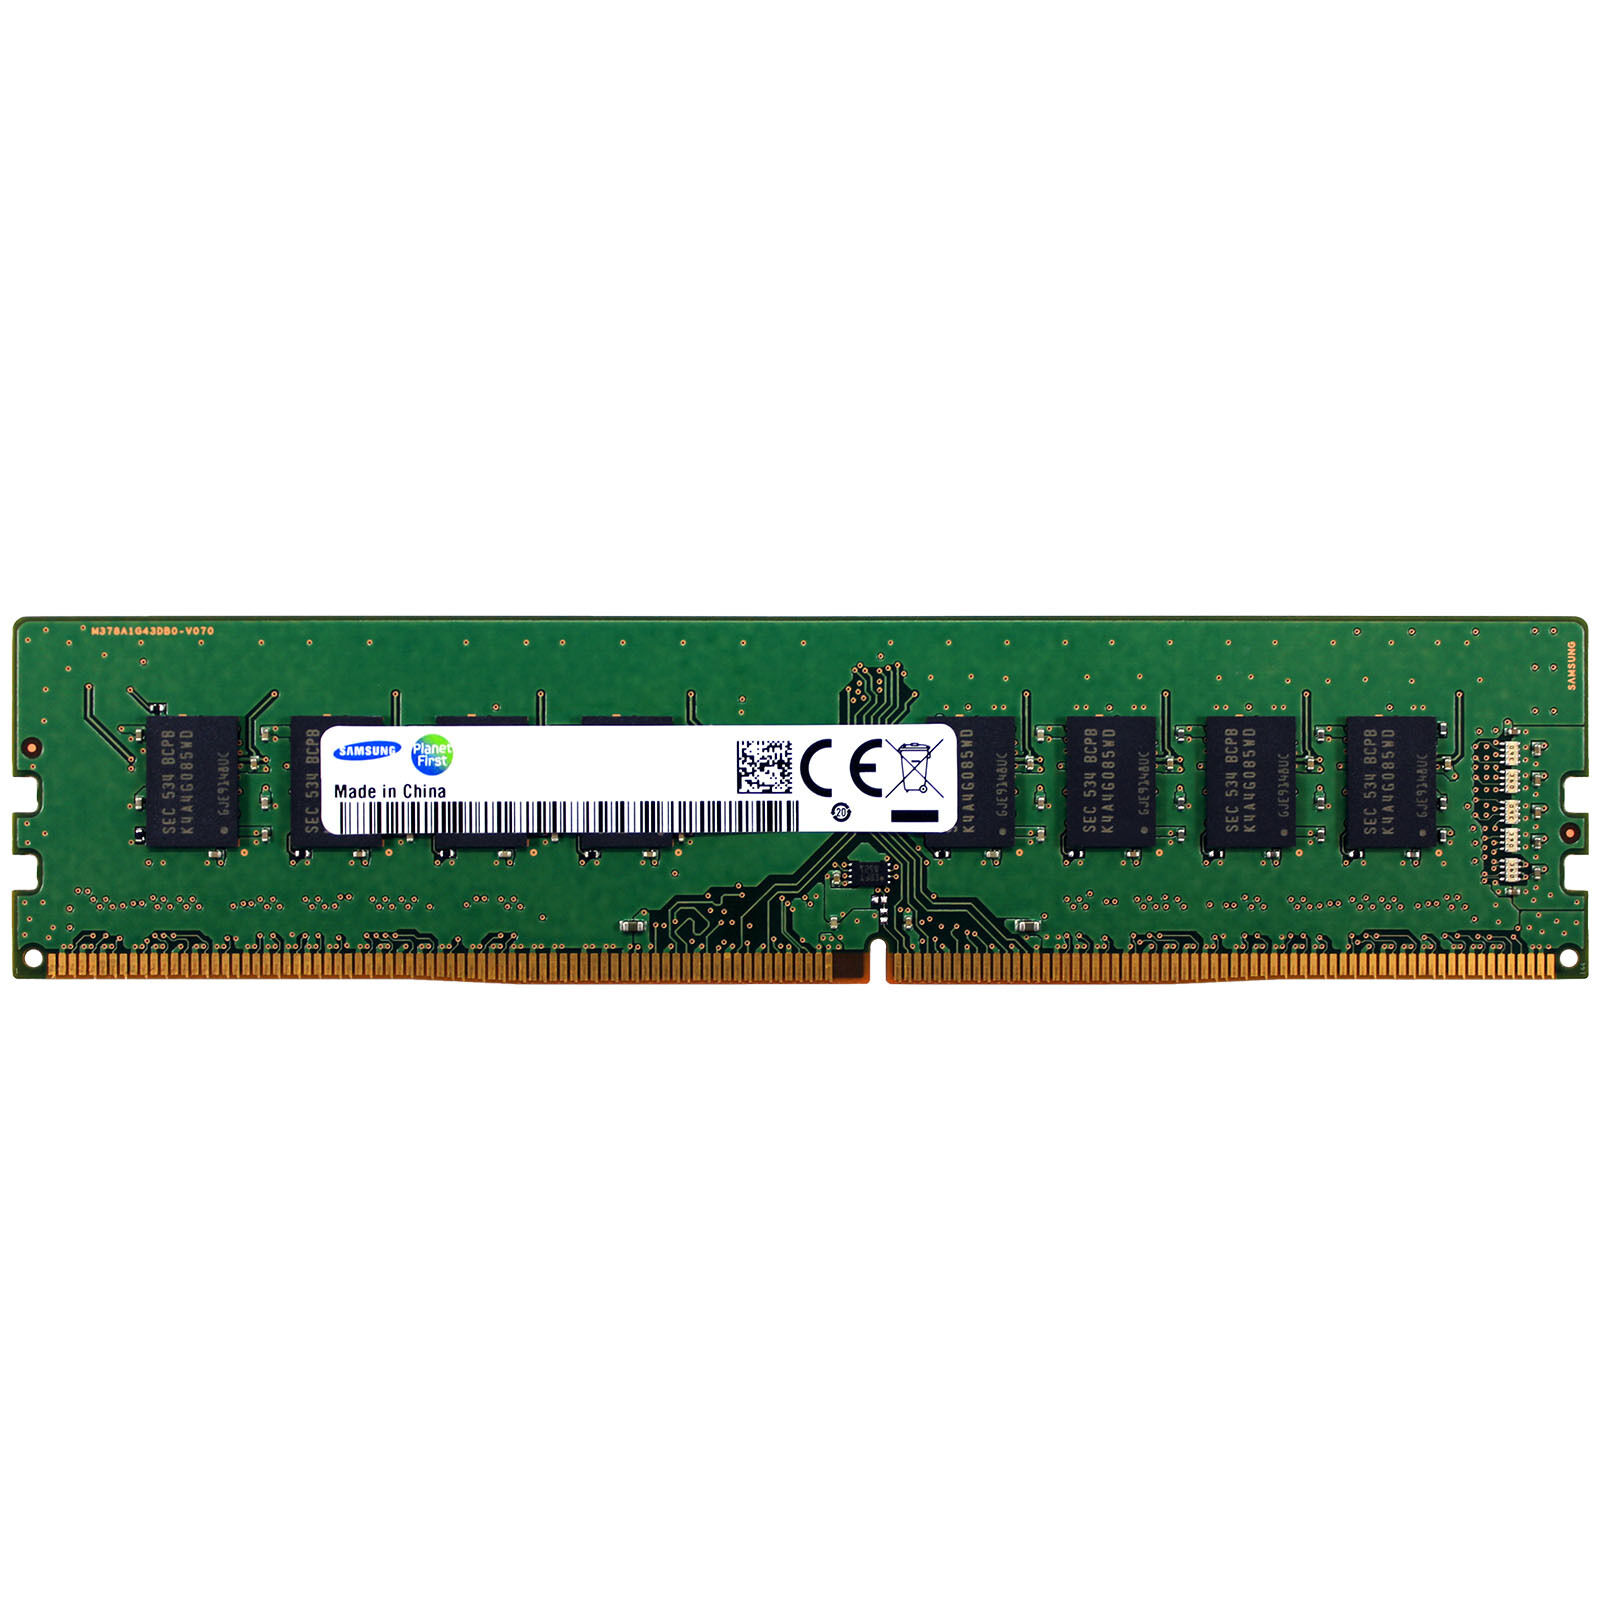 Samsung M378A1K43BB1-CPB 8GB DDR4 2133 PC4-17000 Non-ECC DIMM Desktop Memory RAM